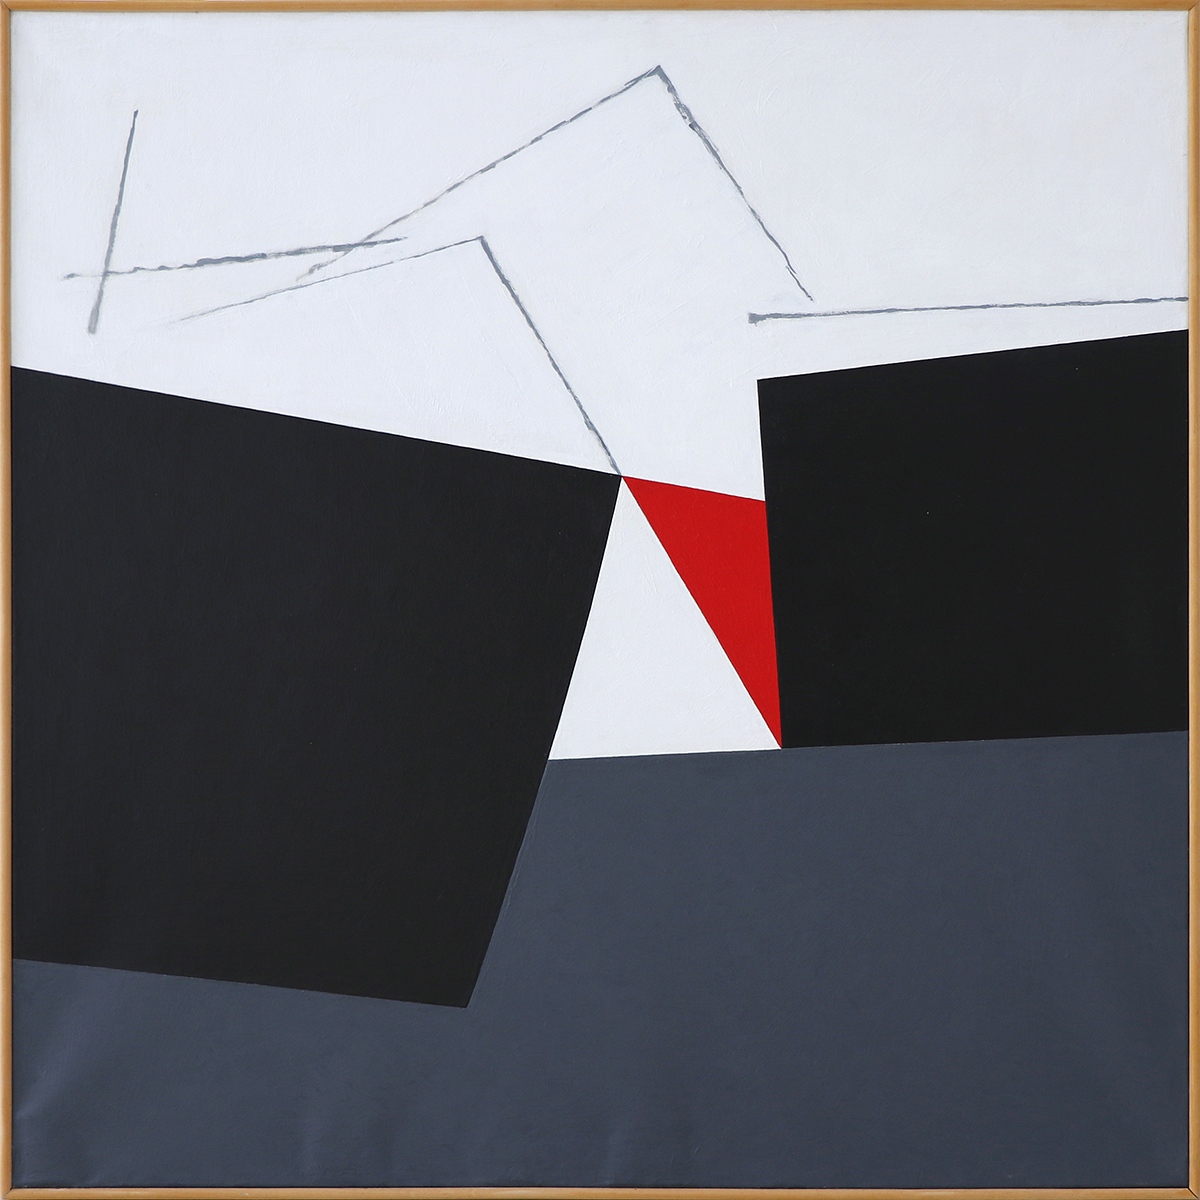 Verschiebung, 1971100,5 x 100,5 cmAcrylic on canvas; framed